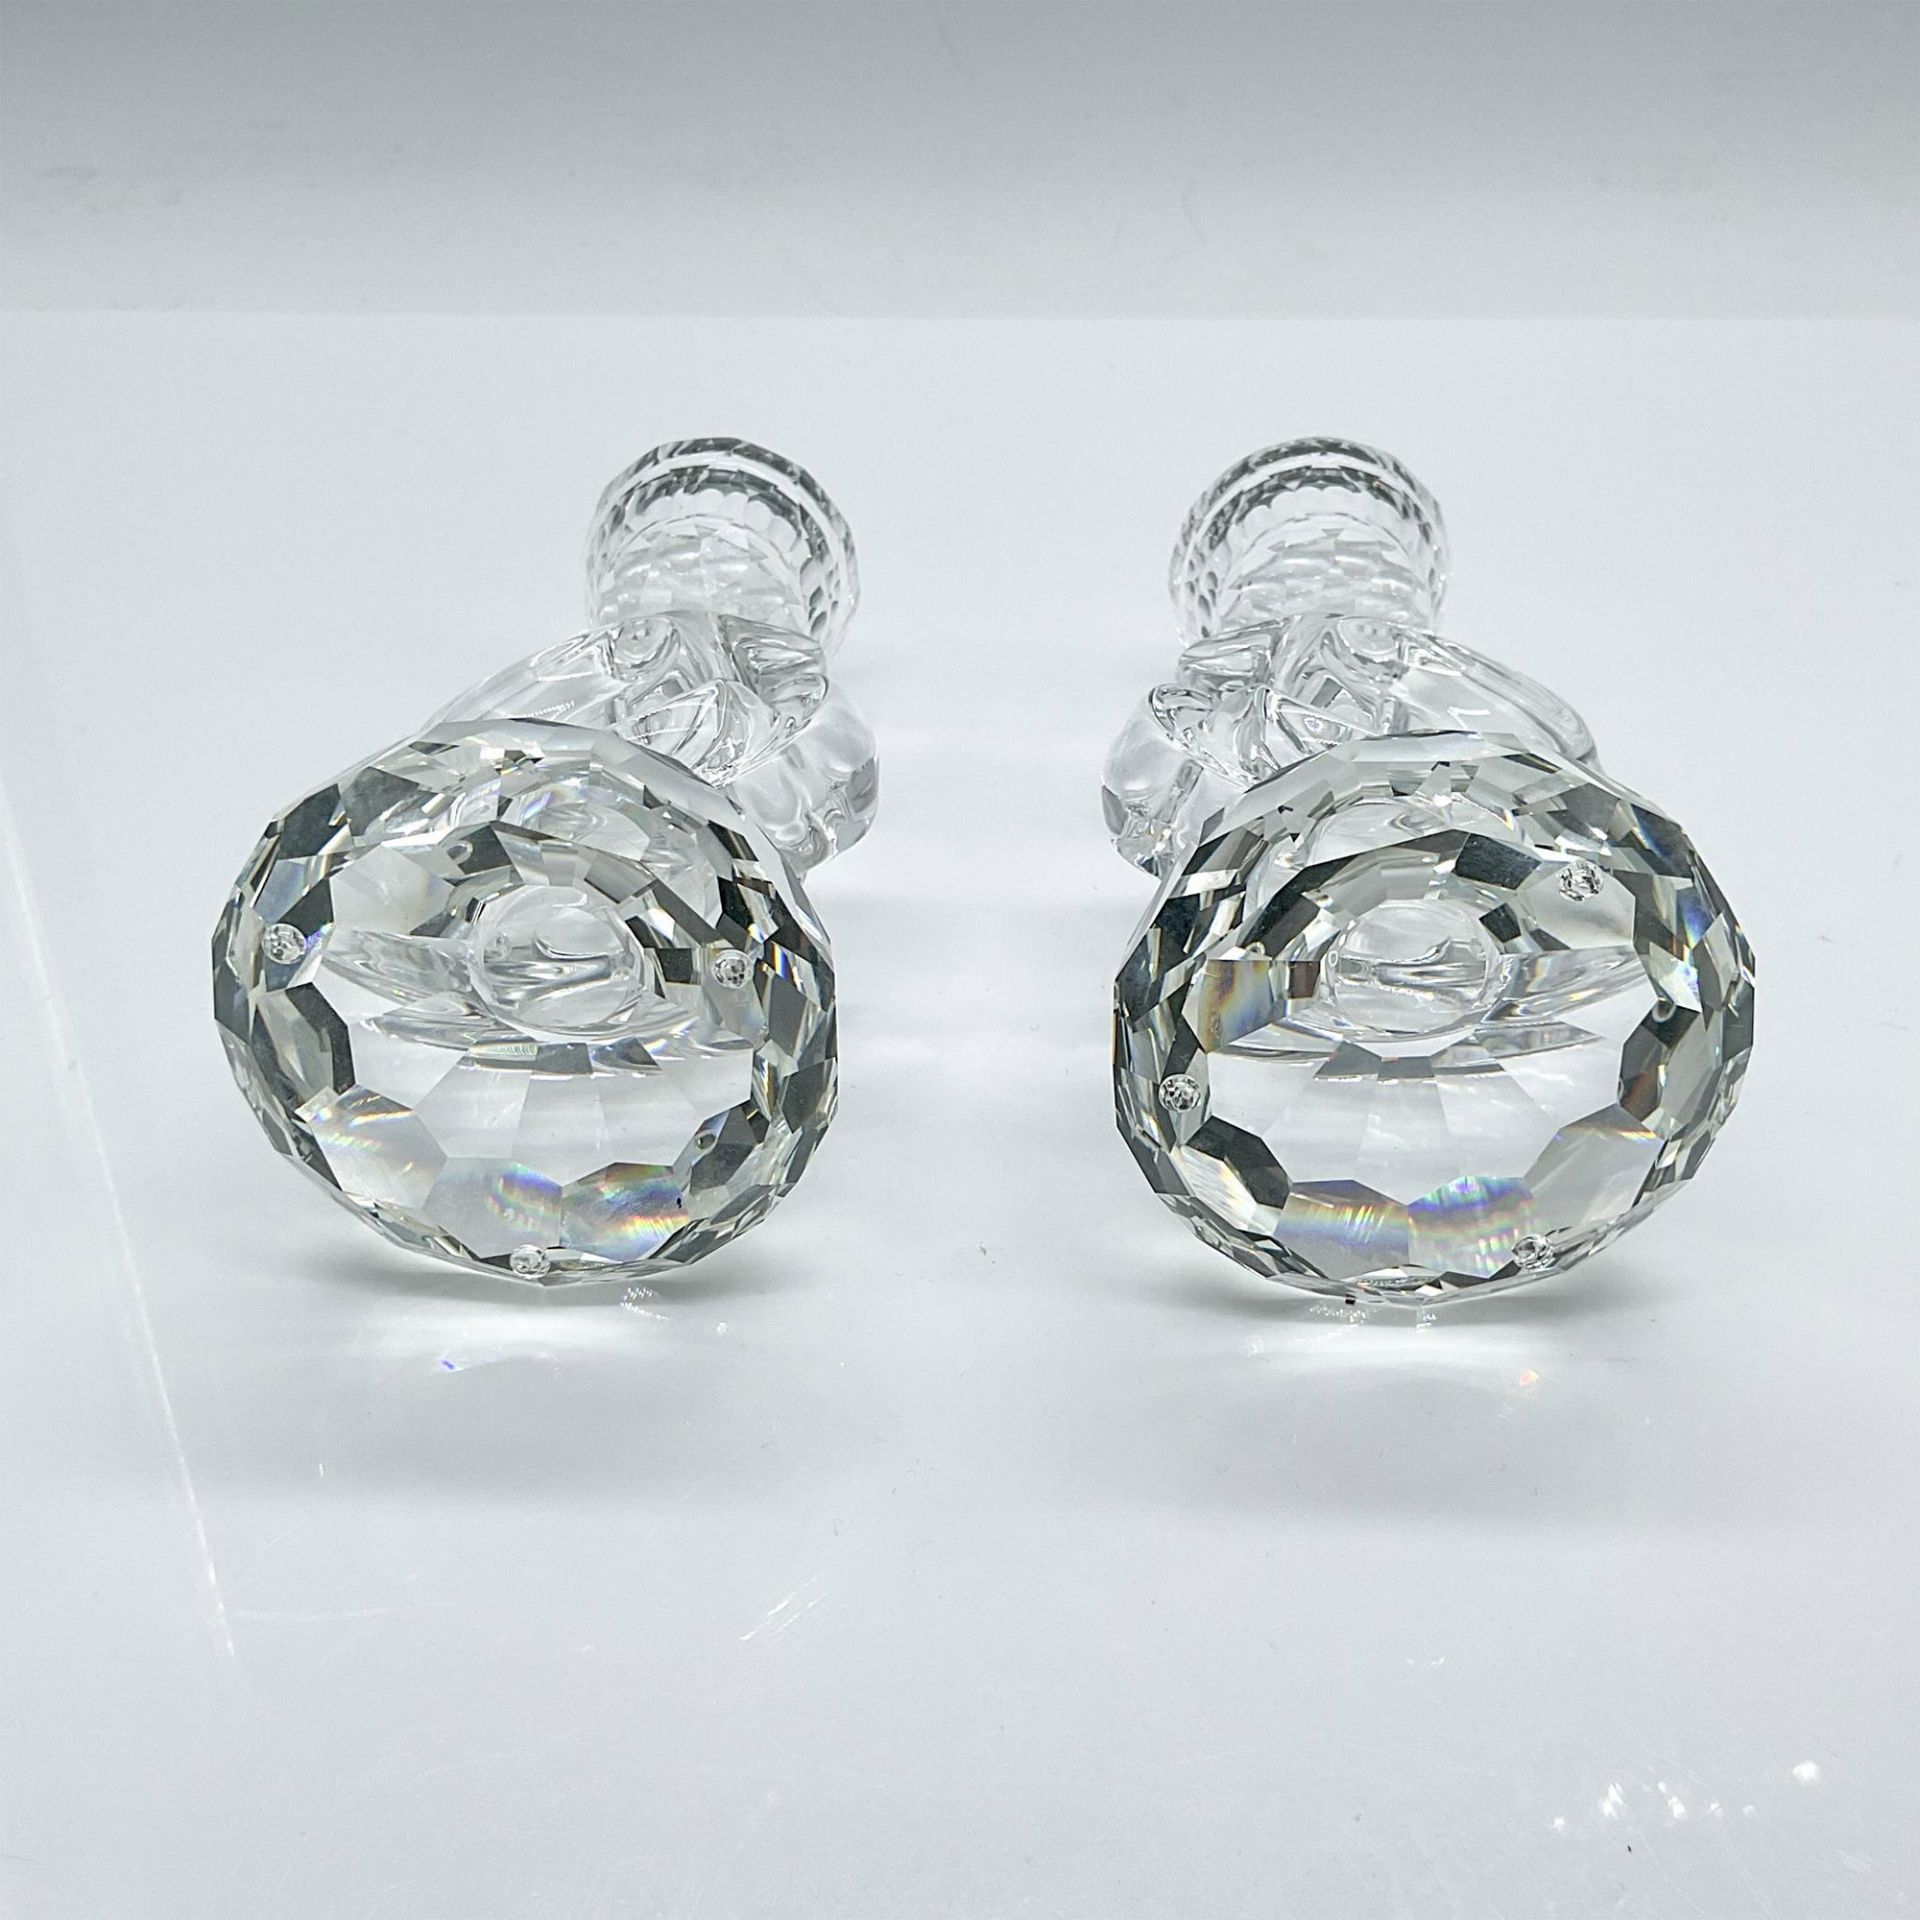 Pair of Swarovski Crystal Candlesticks - Image 3 of 4